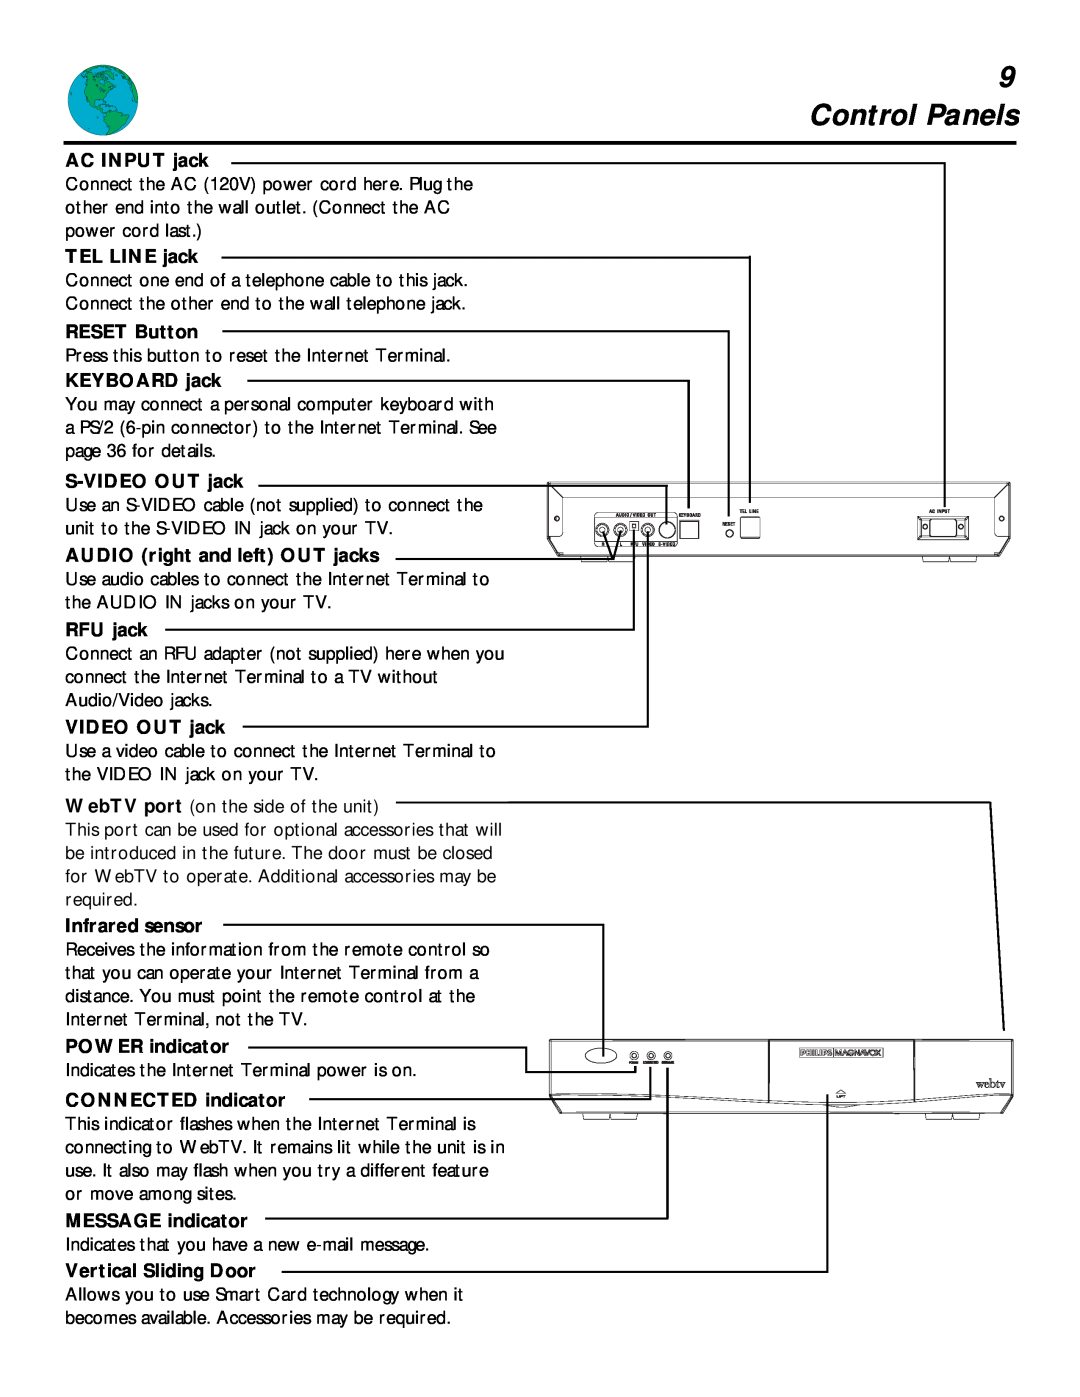 Philips MAT960 manual Control Panels, AC INPUT jack, TEL LINE jack, RESET Button, KEYBOARD jack, S-VIDEO OUT jack, RFU jack 